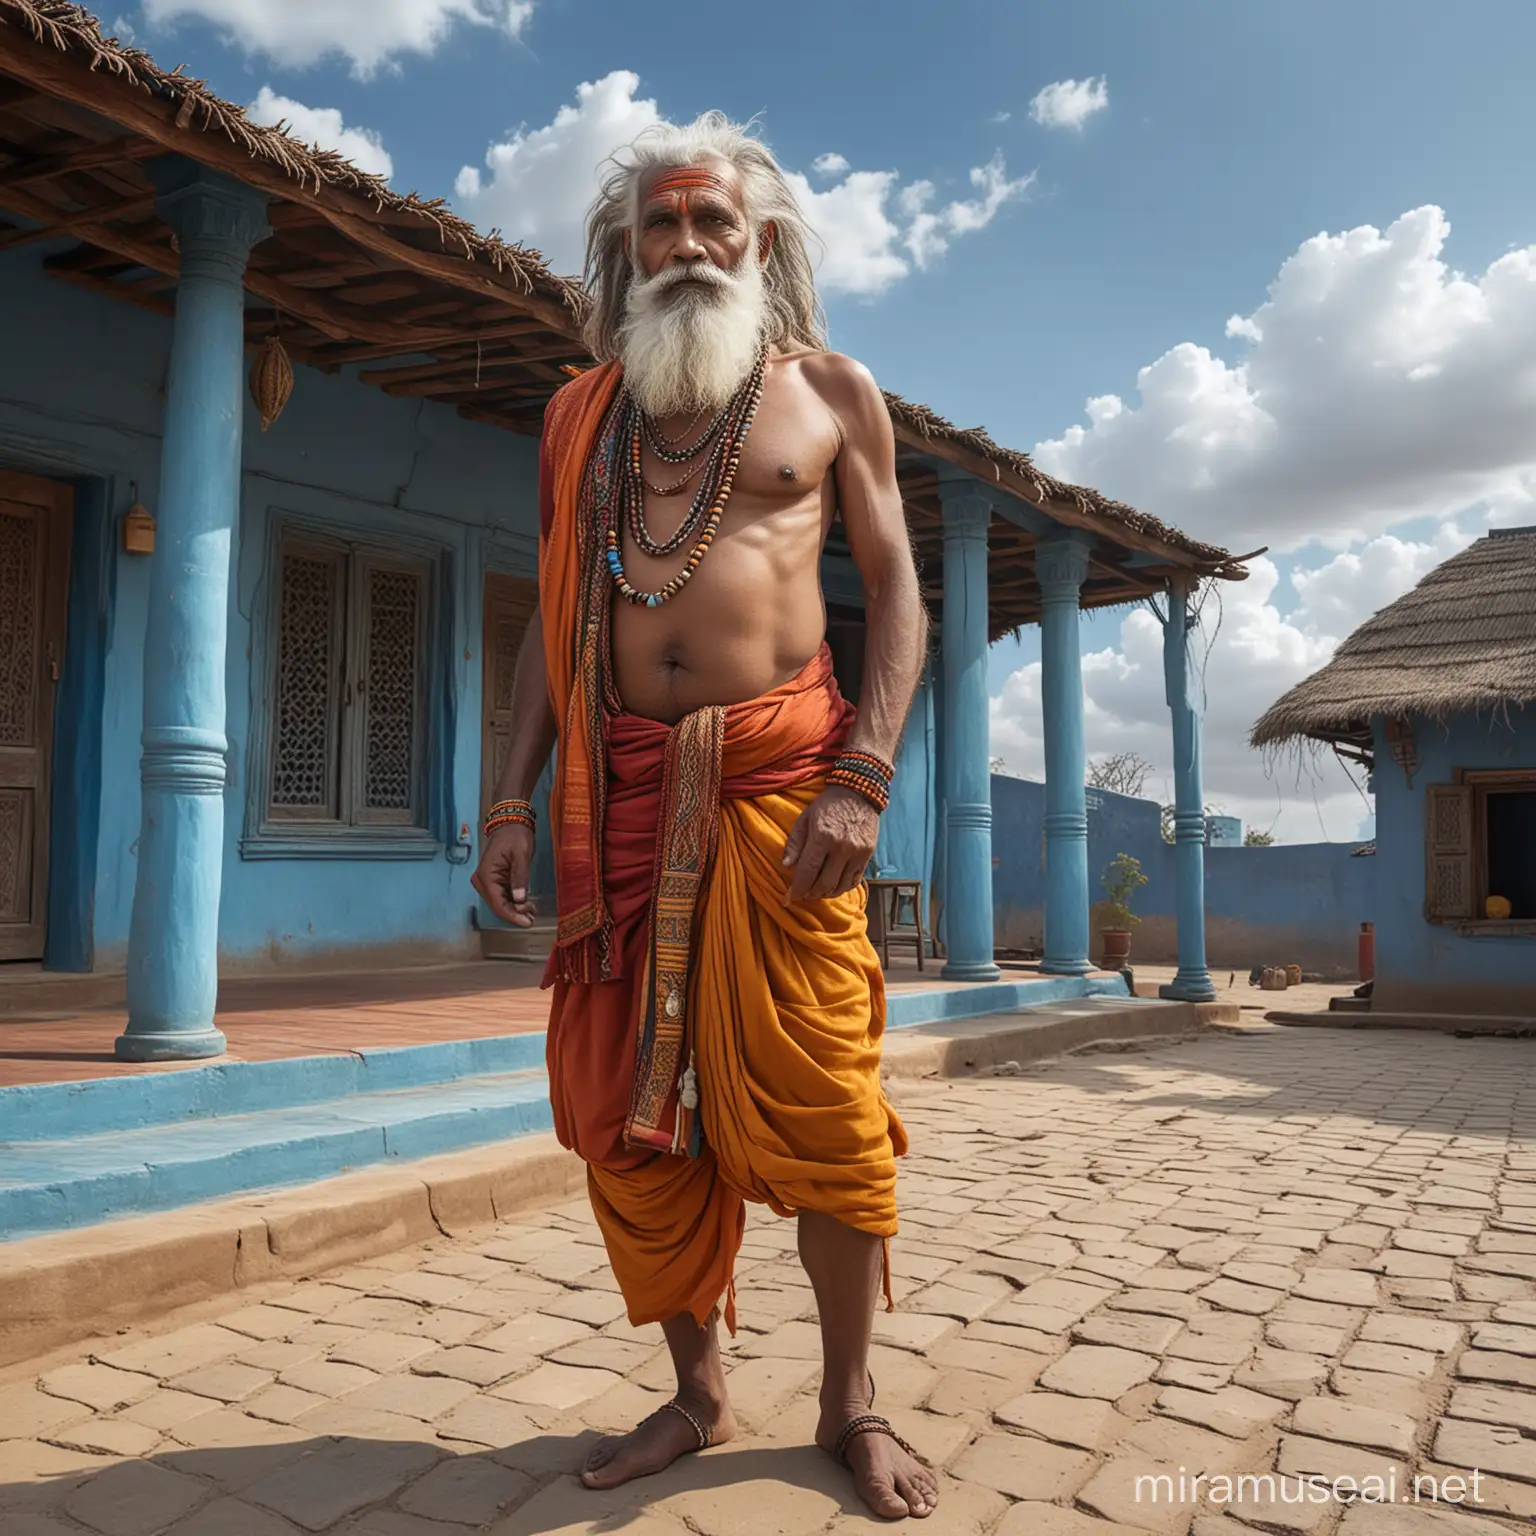 Naga sadhu india 80 years old white beard colorfull dresd standing before bleu rajasthan house by clouxy sky total full body fotorealistische  detaild